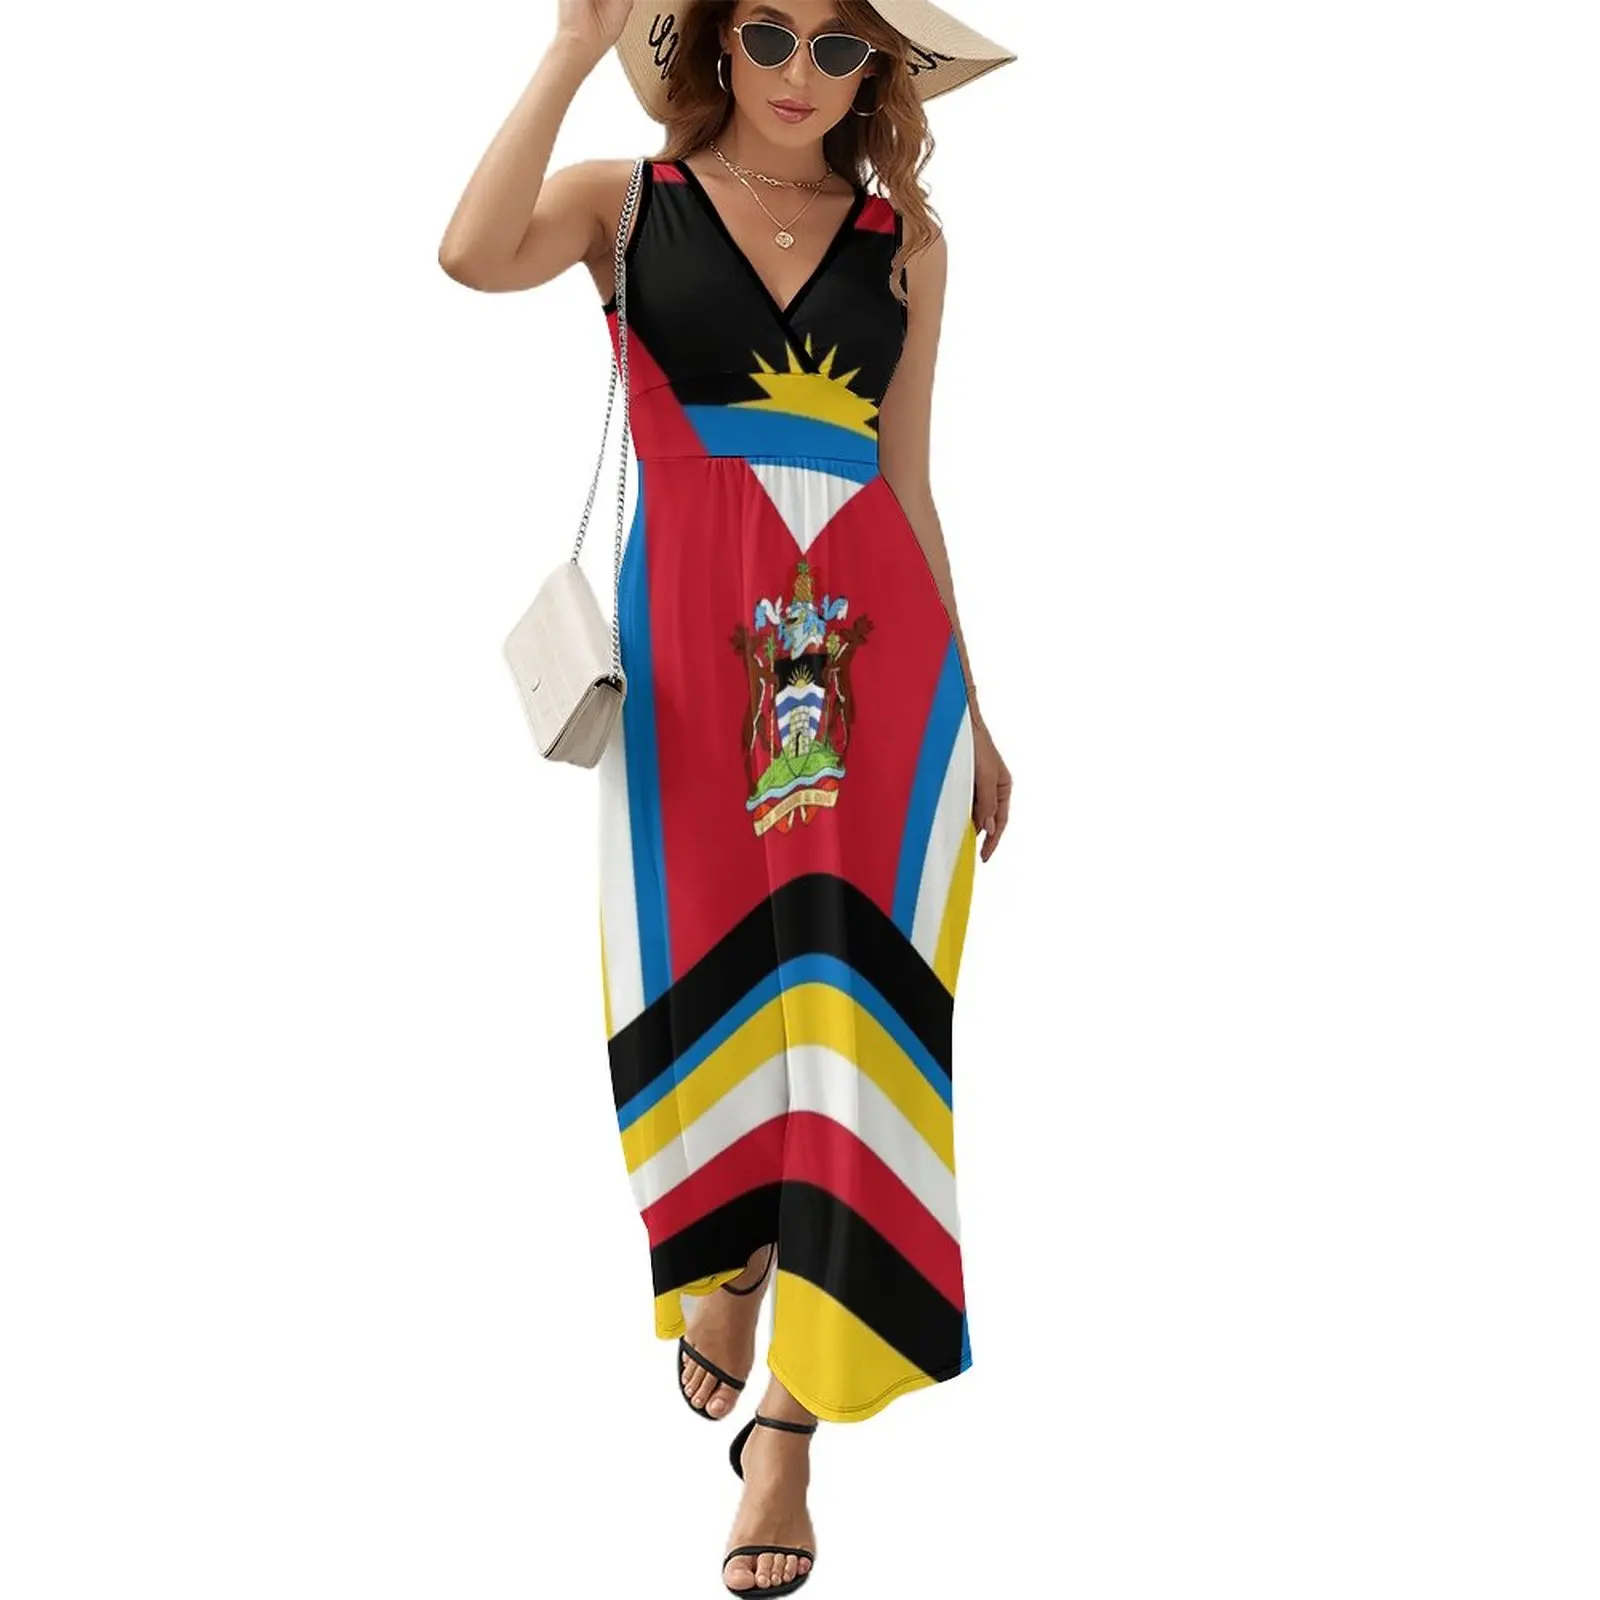 

Antigua and Barbuda 2 Sleeveless Dress clothes for woman Long veiled dresses women's elegant loose dresses fairy dress